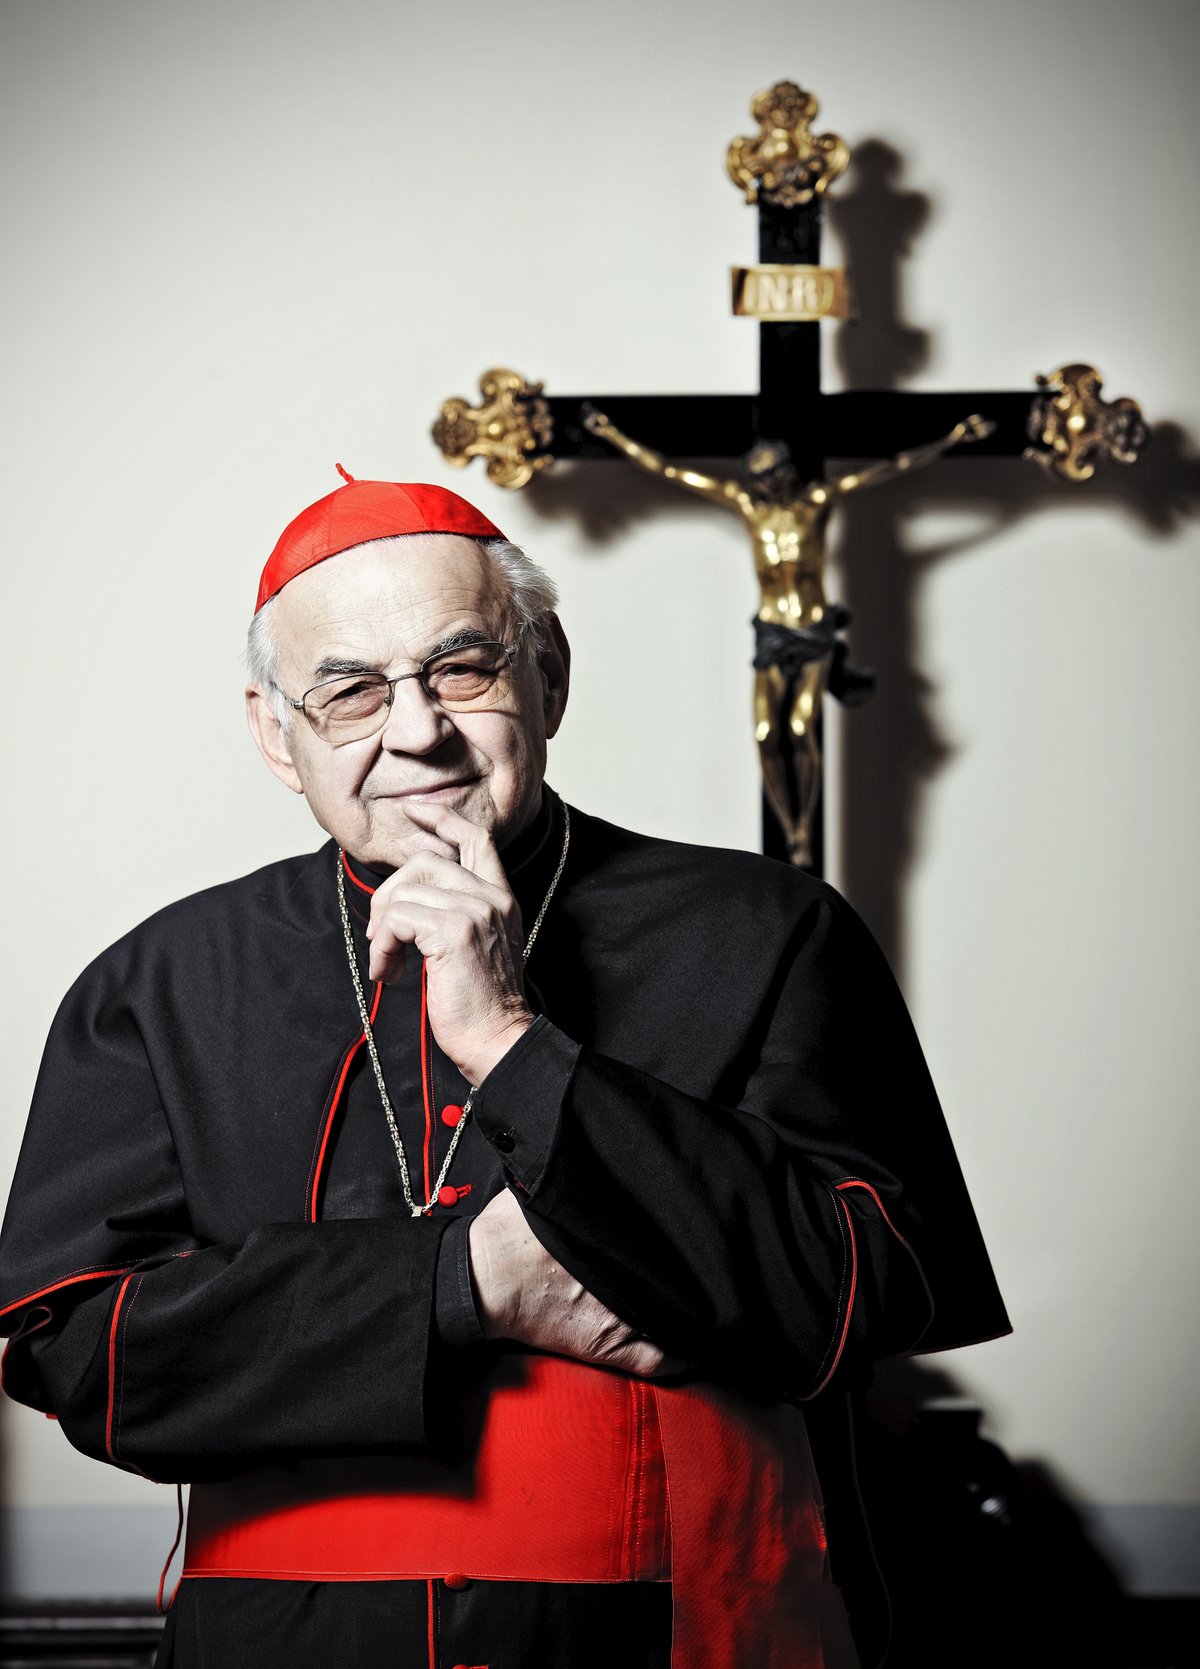 Kardinál Miloslav Vlk (†84)